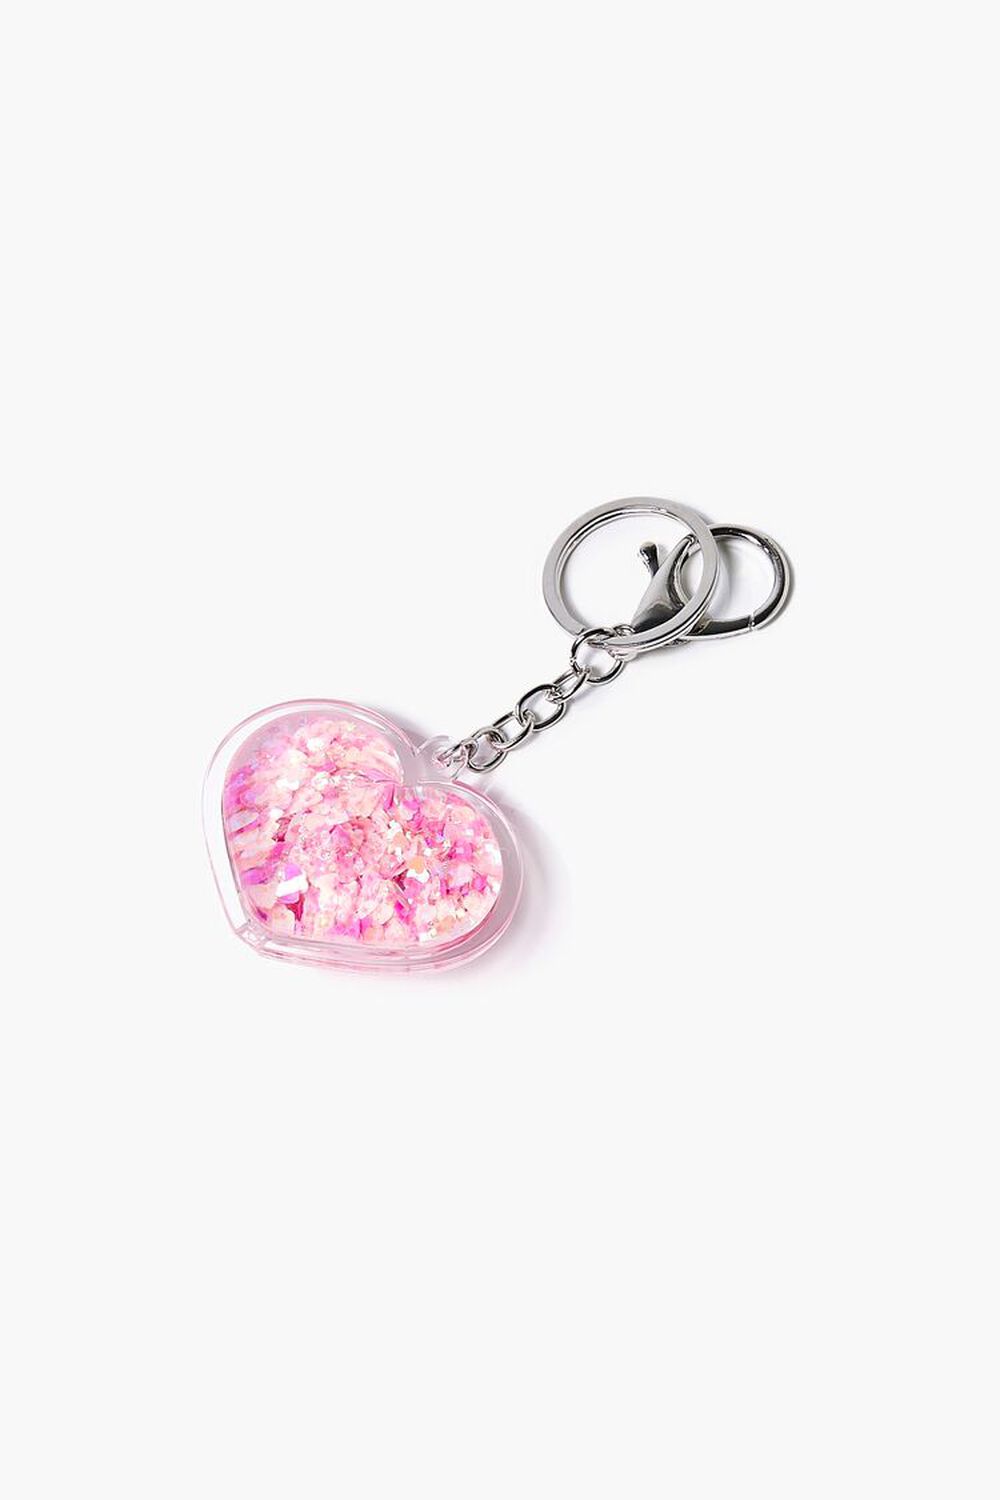 PINK Glitter Heart Keychain, image 1